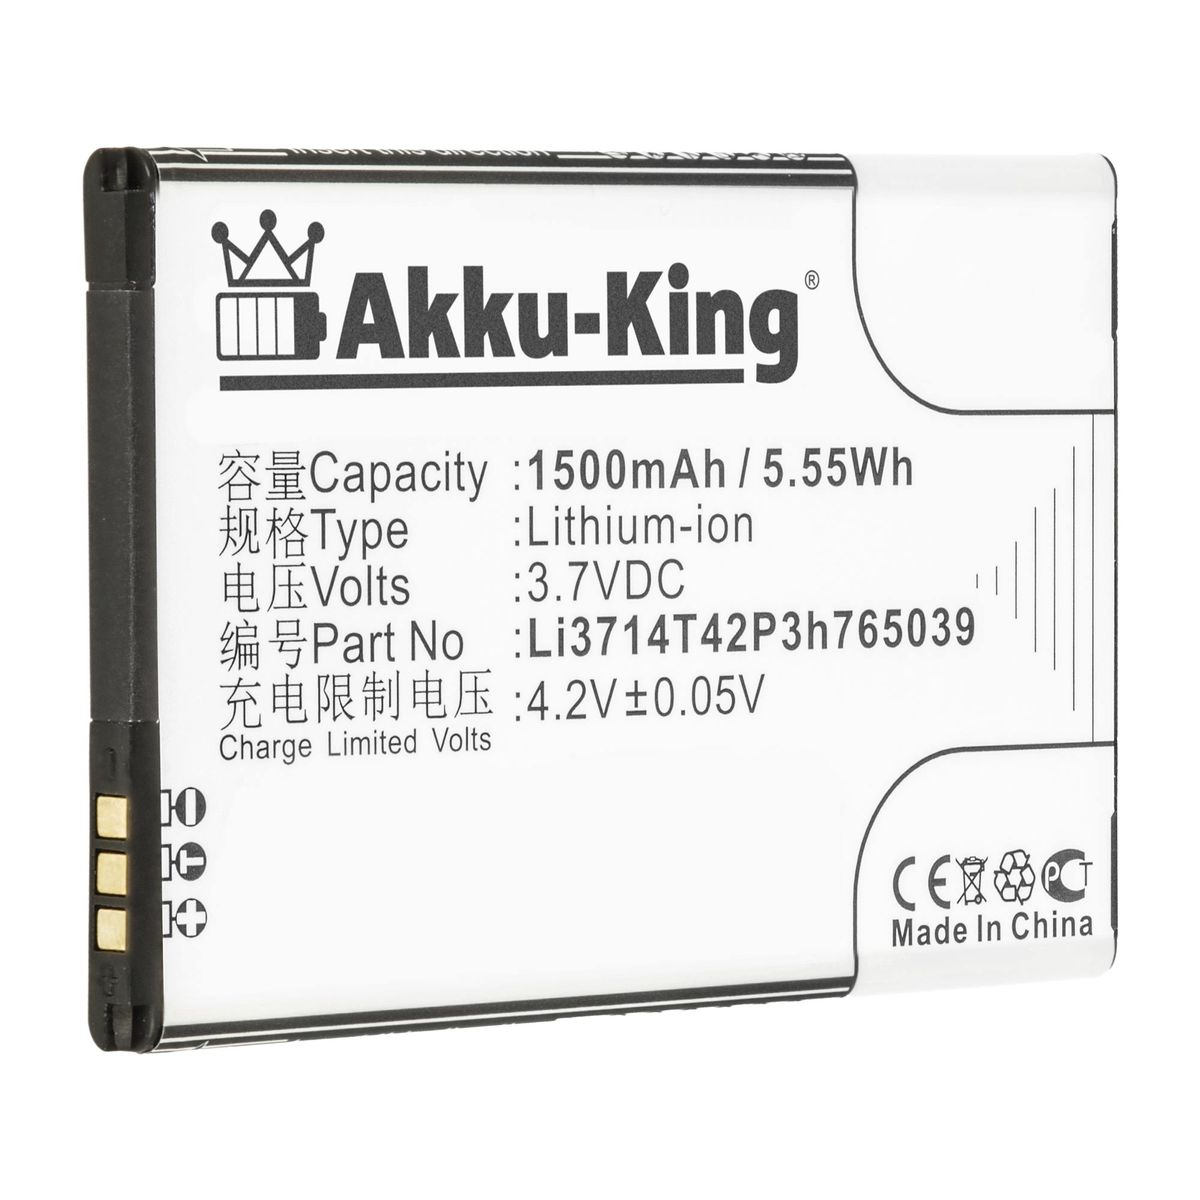 Li3714T42P3h765039 mit Volt, AKKU-KING Akku 3.7 Li-Ion ZTE Handy-Akku, 1500mAh kompatibel